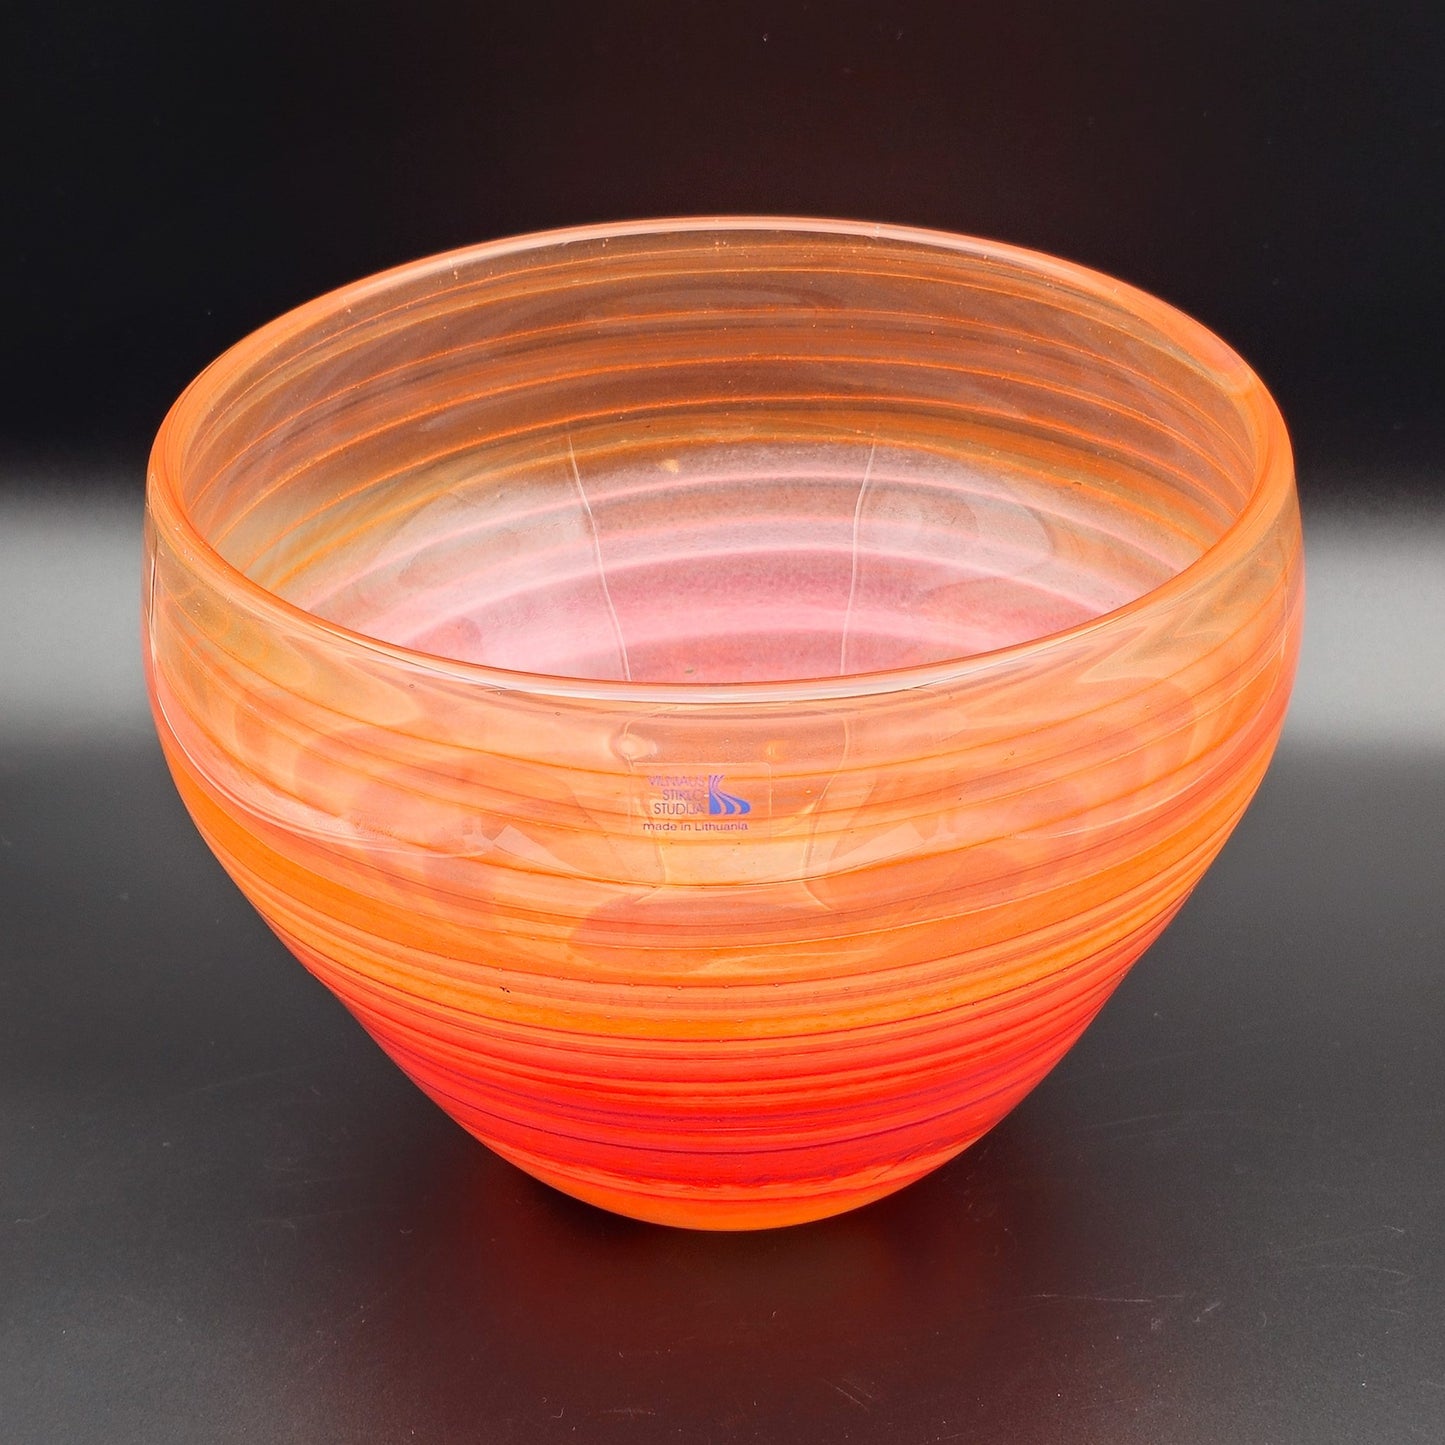 VILNIAUS STIKLO STUDIJA Contemporary Studio Art Red Orange Glass Bowl